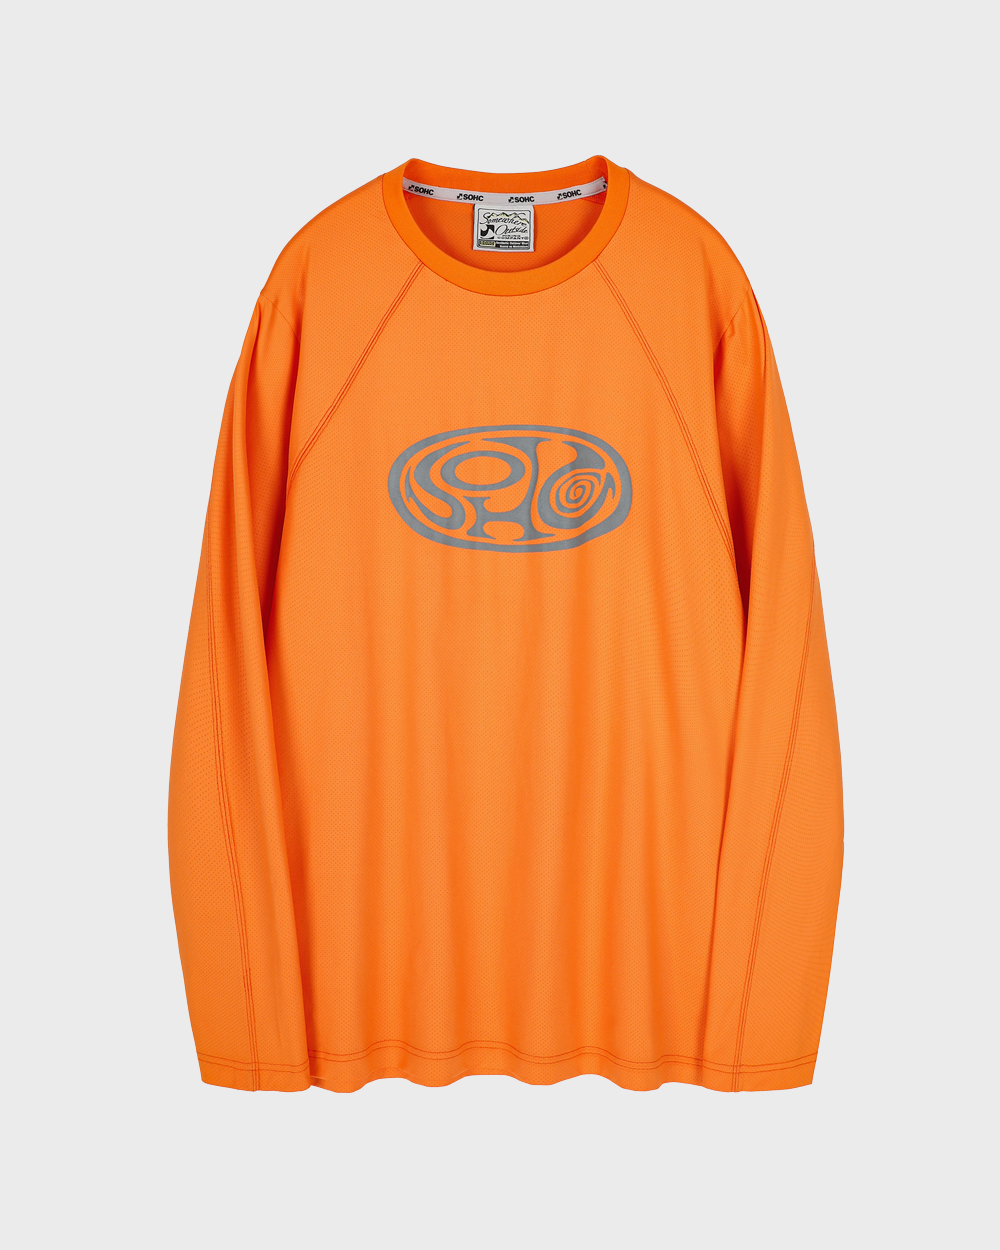 Hatching Egg SOHC Reflective Print T-Shirt (Orange)